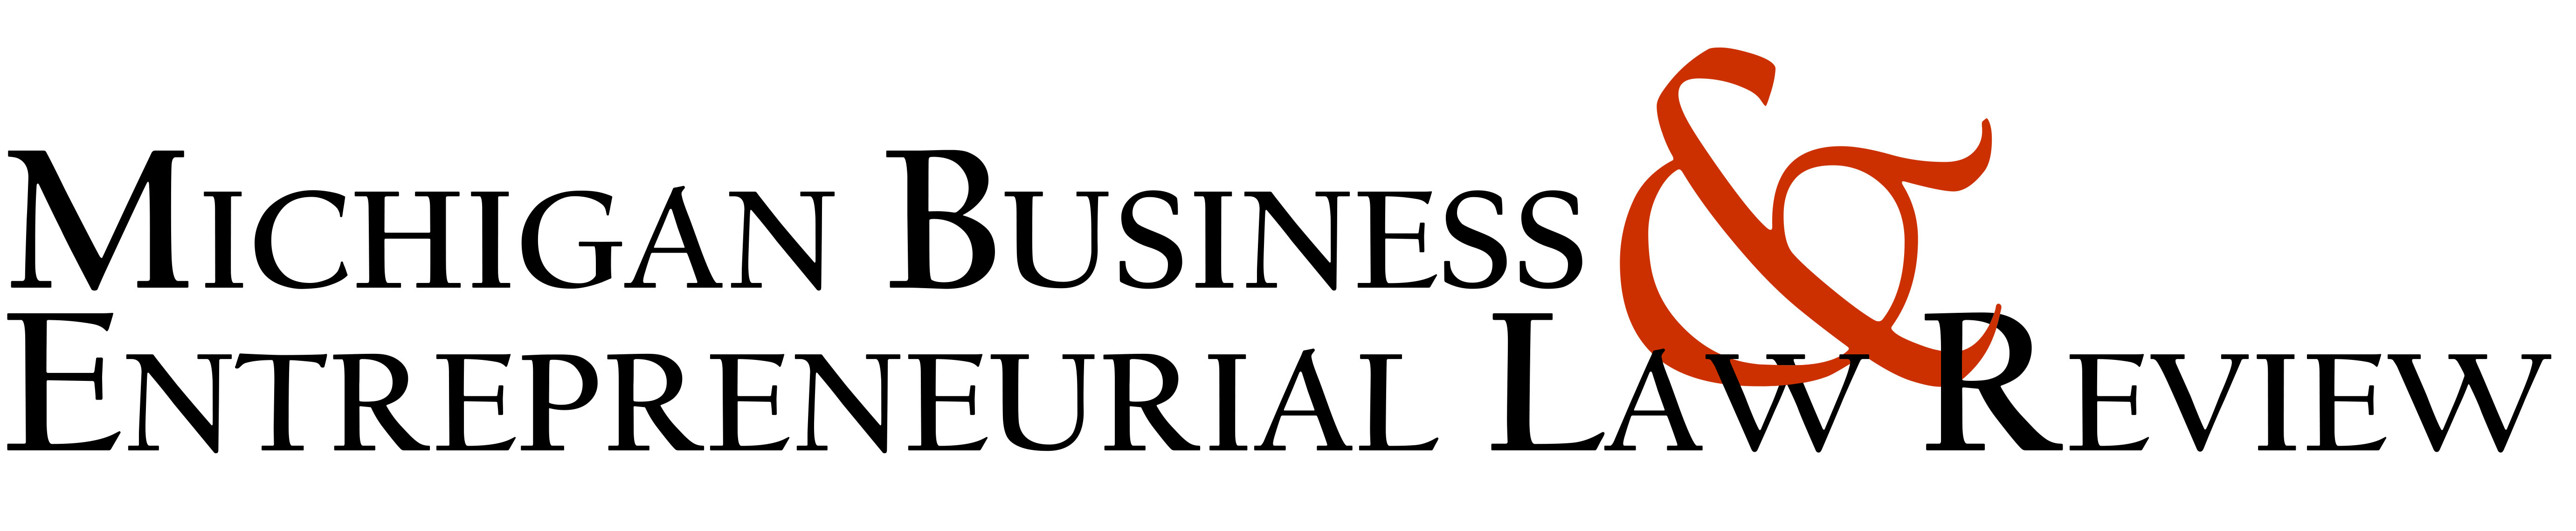 Michigan Business & Entrepreneurial Law Review